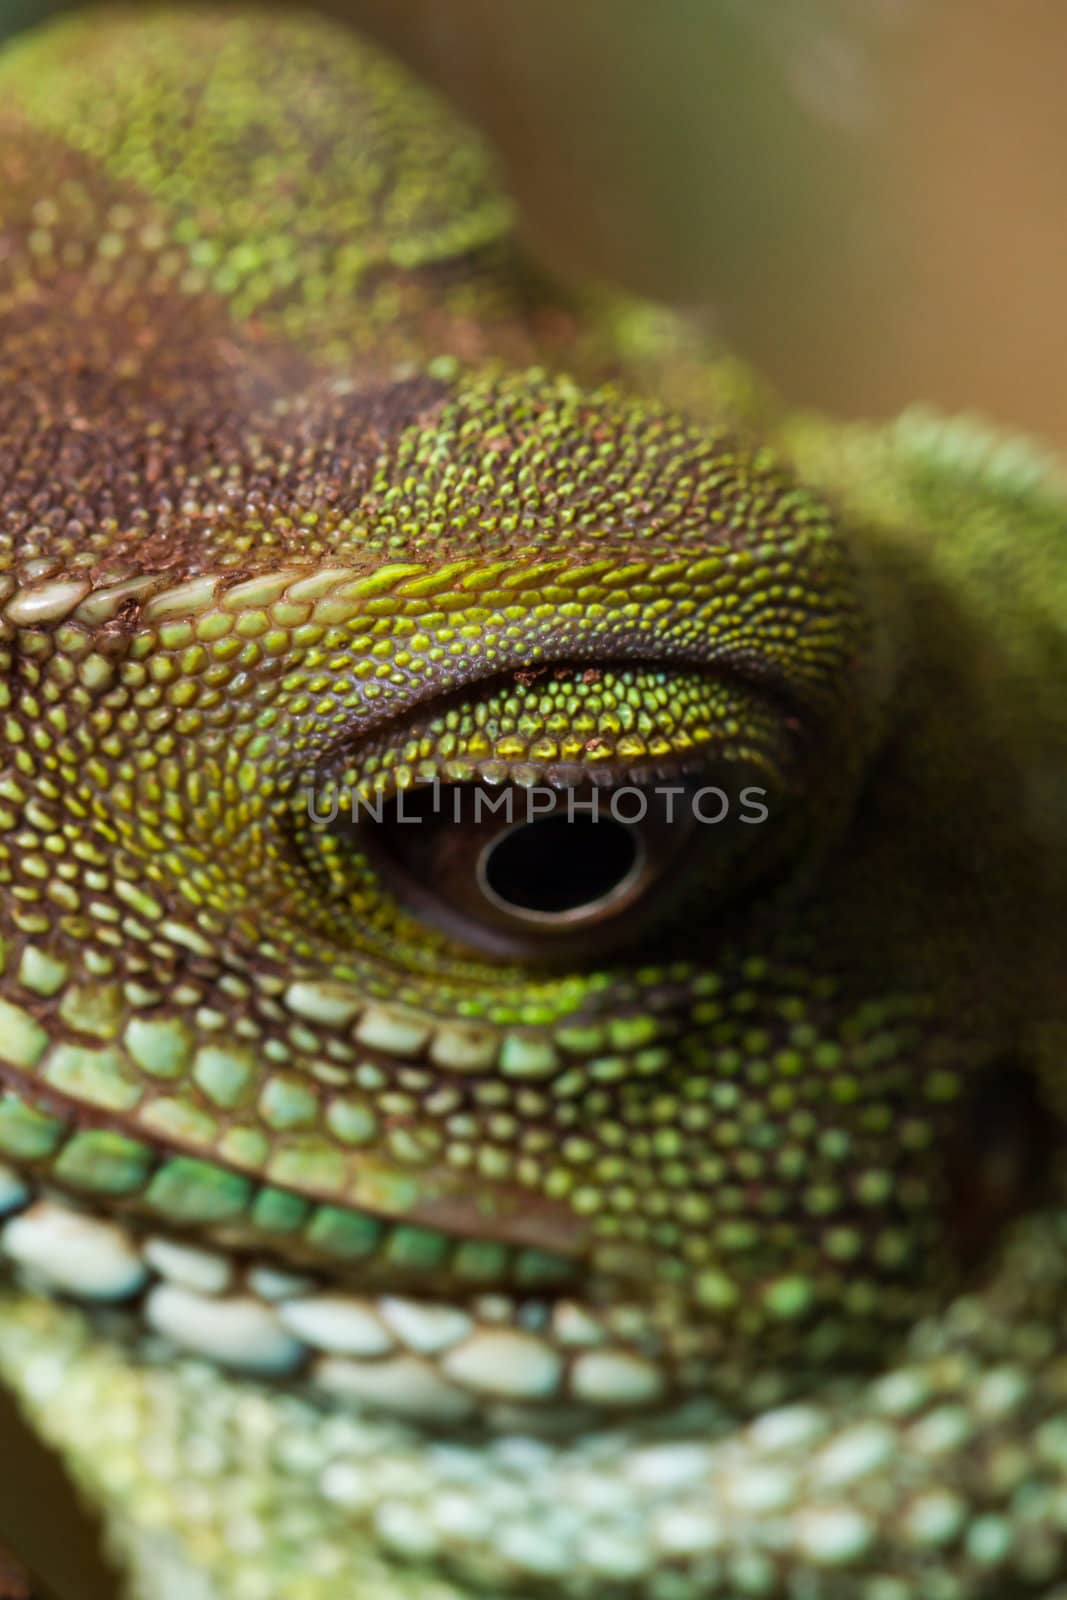 Head and eye of an adult agama (Physignathus cocincinu) by NagyDodo